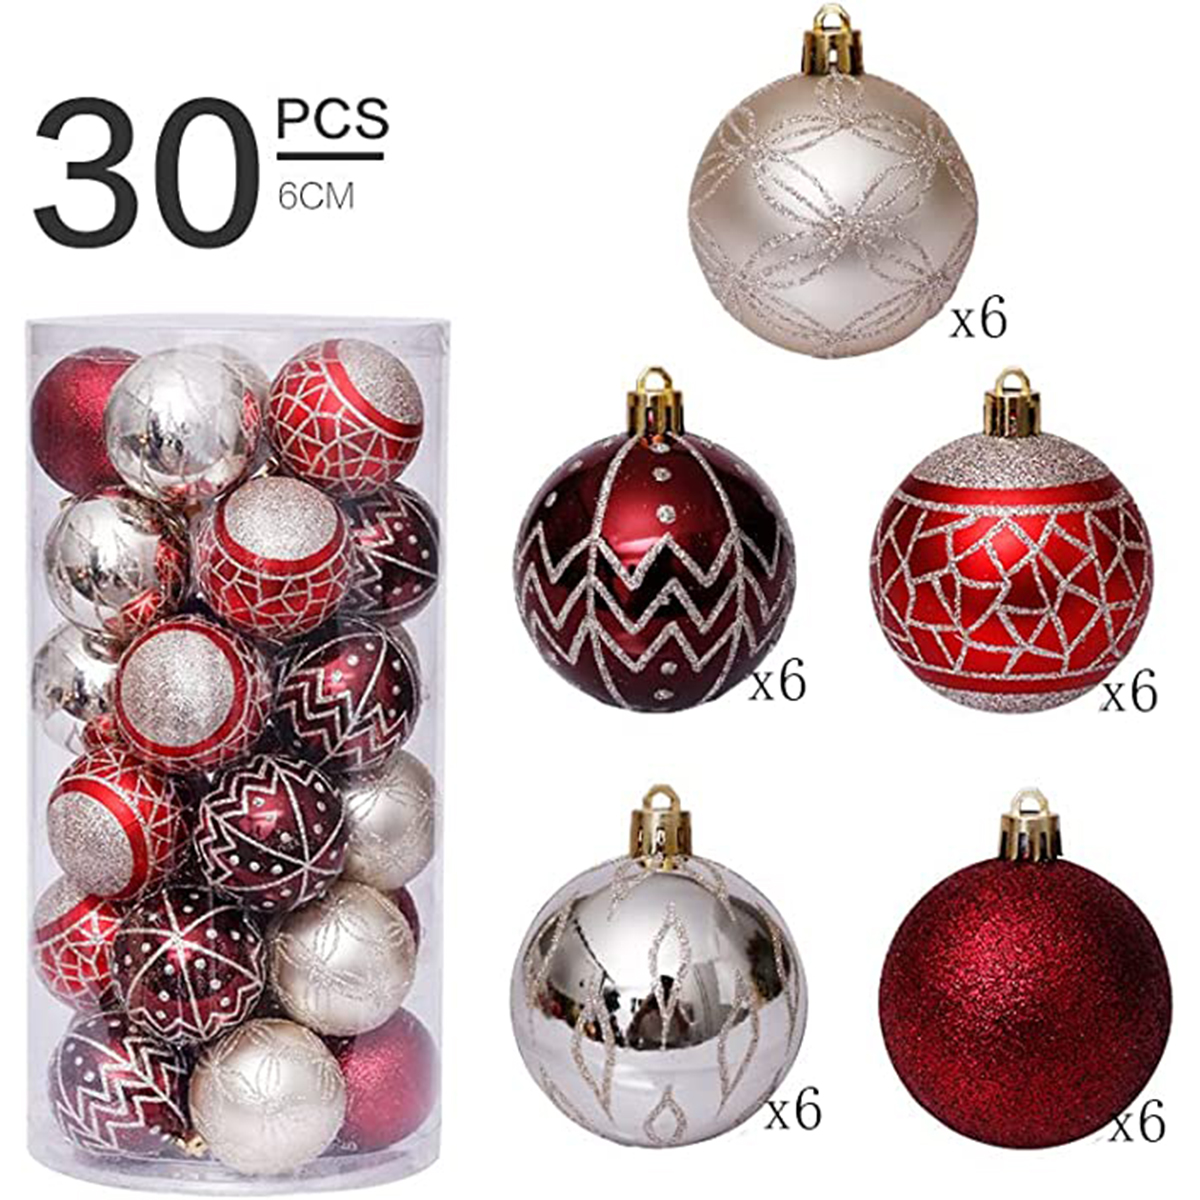 30 Pcs Painting Shatterproof Christmas Ball 6CM,Burgundy/Silver